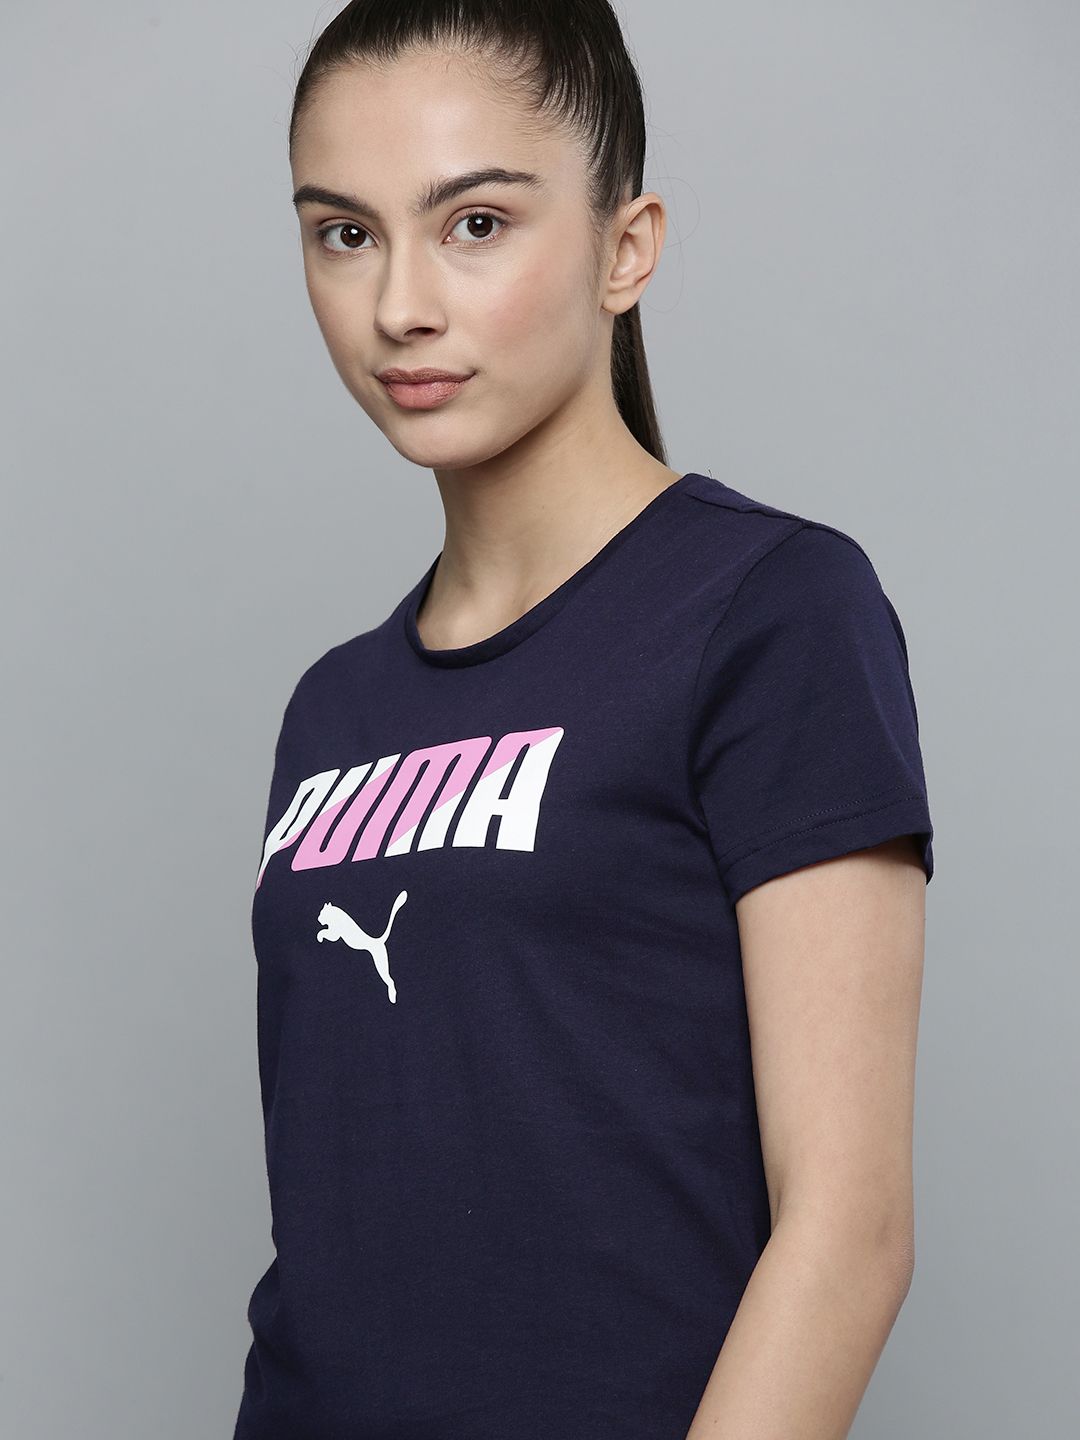 Puma Women Navy Blue Brand Logo Printed Pure Cotton T-shirt Price in India